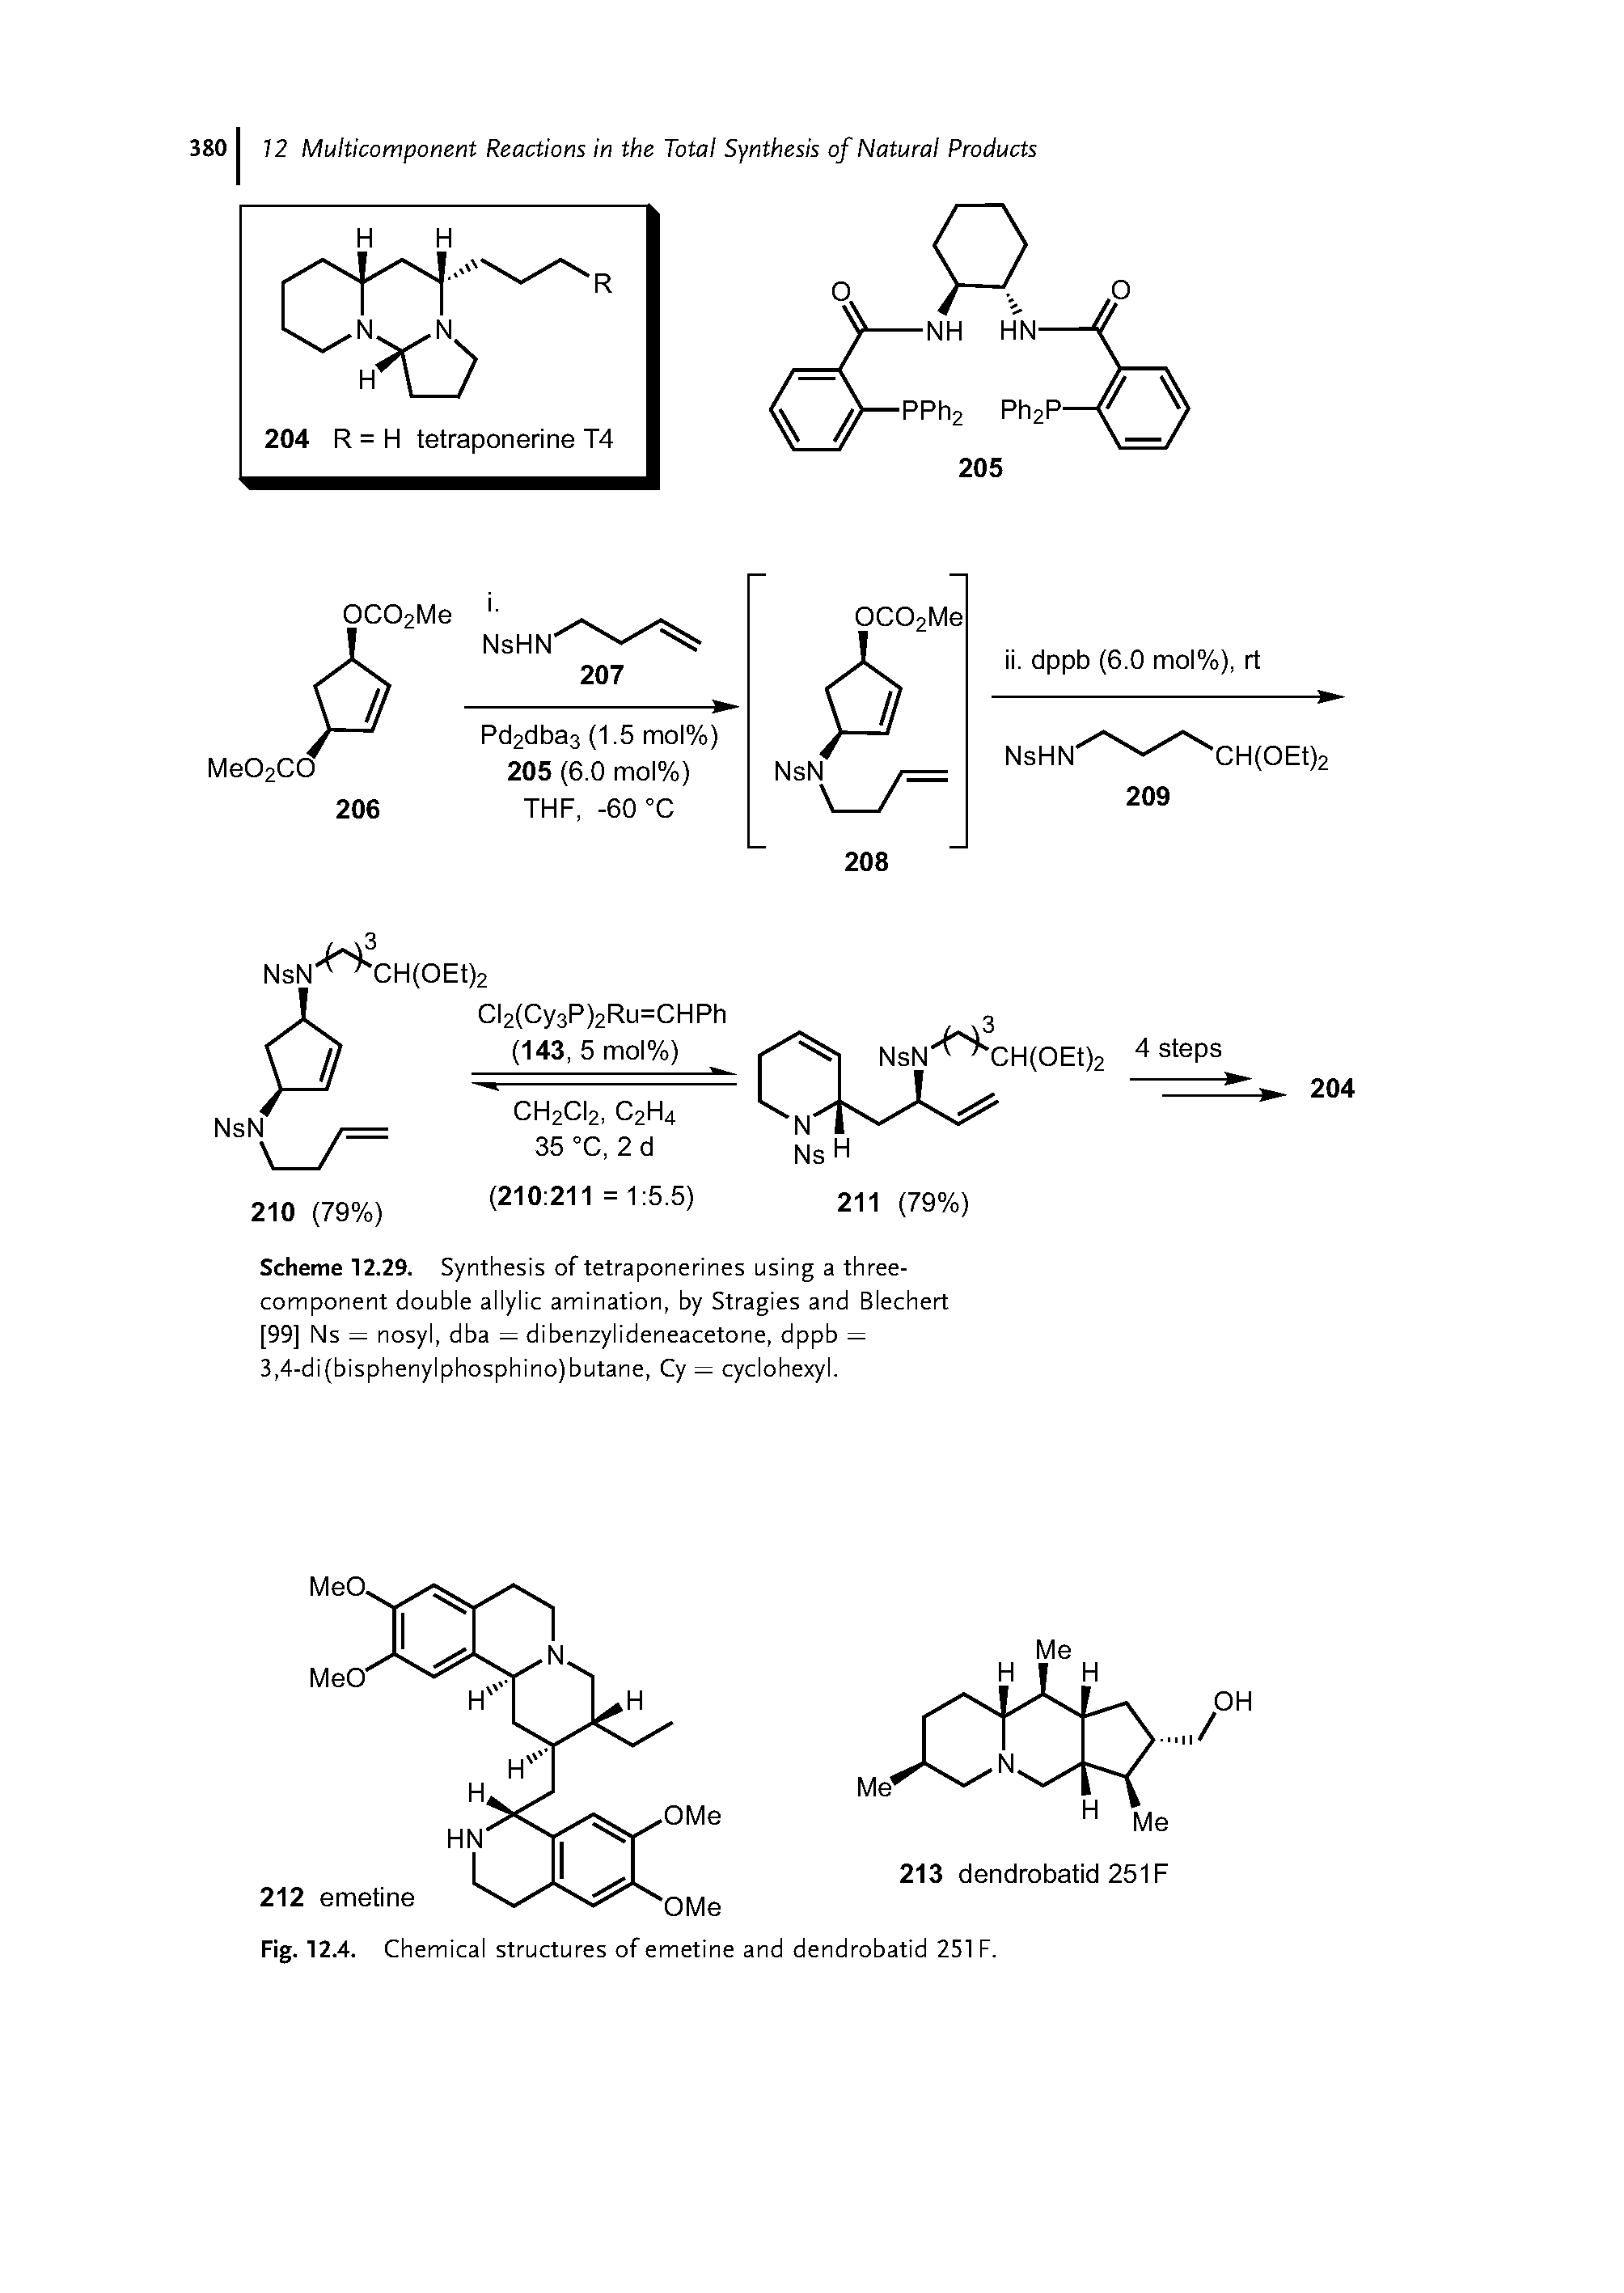 Scheme 12.29. Synthesis of tetraponerines using a three-component double allylic animation, by Stragies and Blechert [99] Ns = nosyl, dba = dibenzylideneacetone, dppb = 3,4-di(bisphenylphosphino)butane, Cy = cyclohexyl.